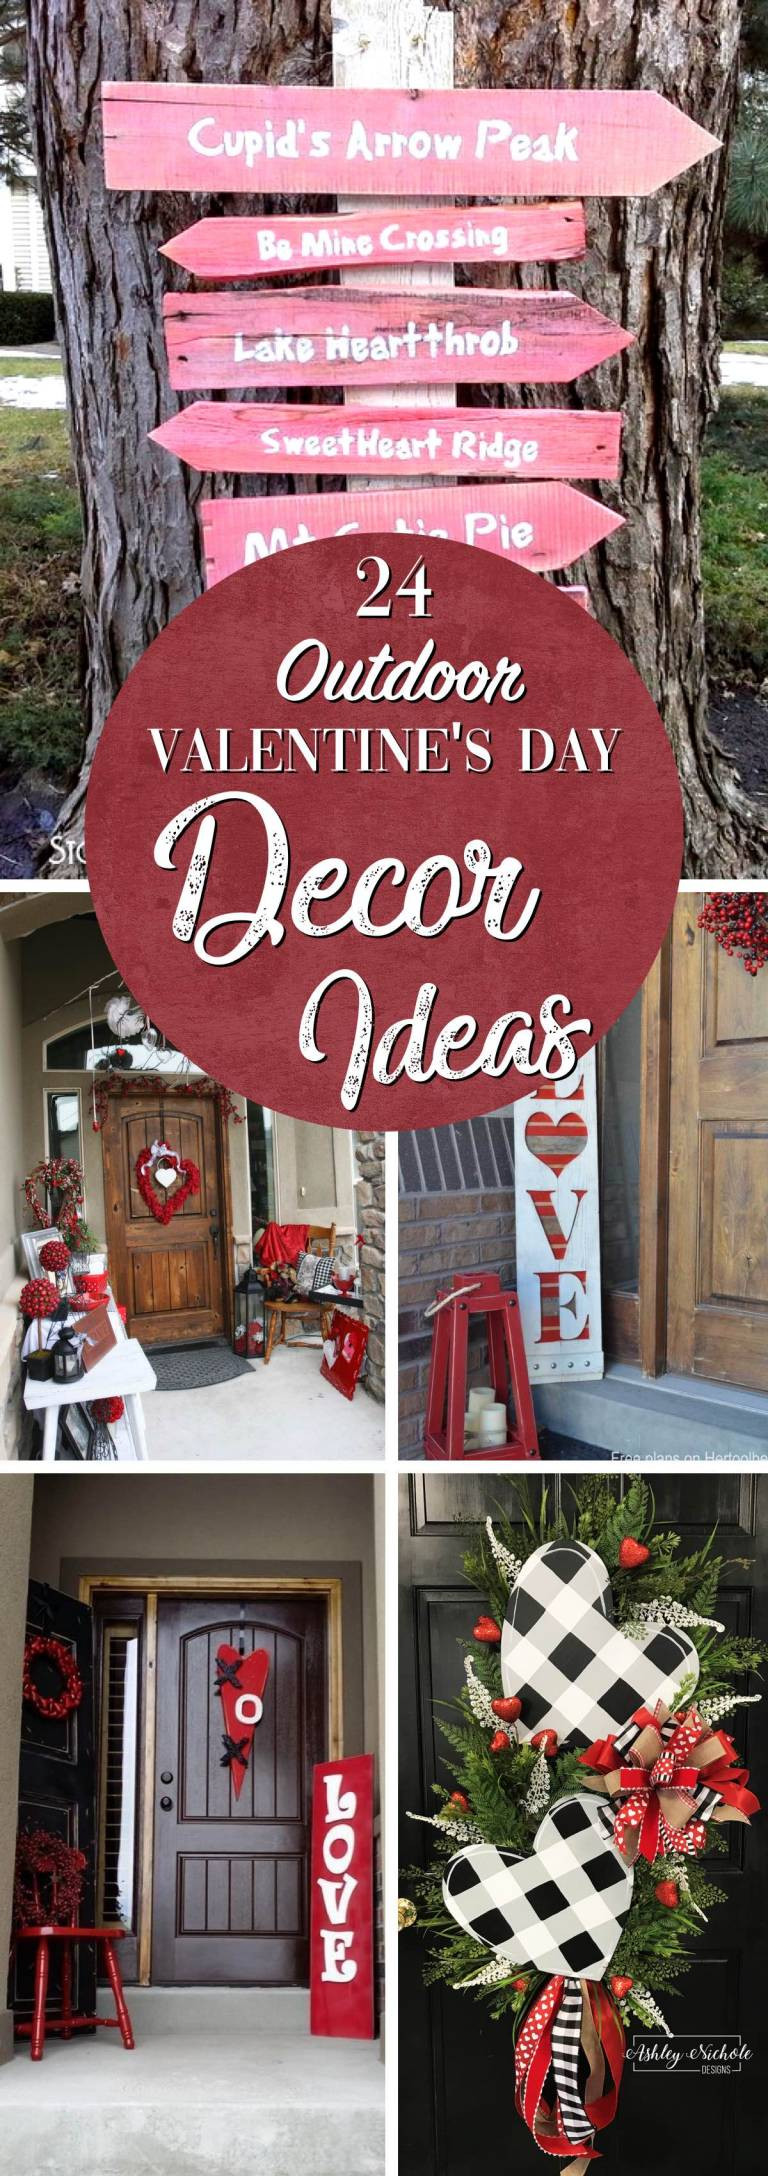 Valentines Day Ideas 2019
 Best 24 Outdoor Valentine s Day Decor Ideas for 2019